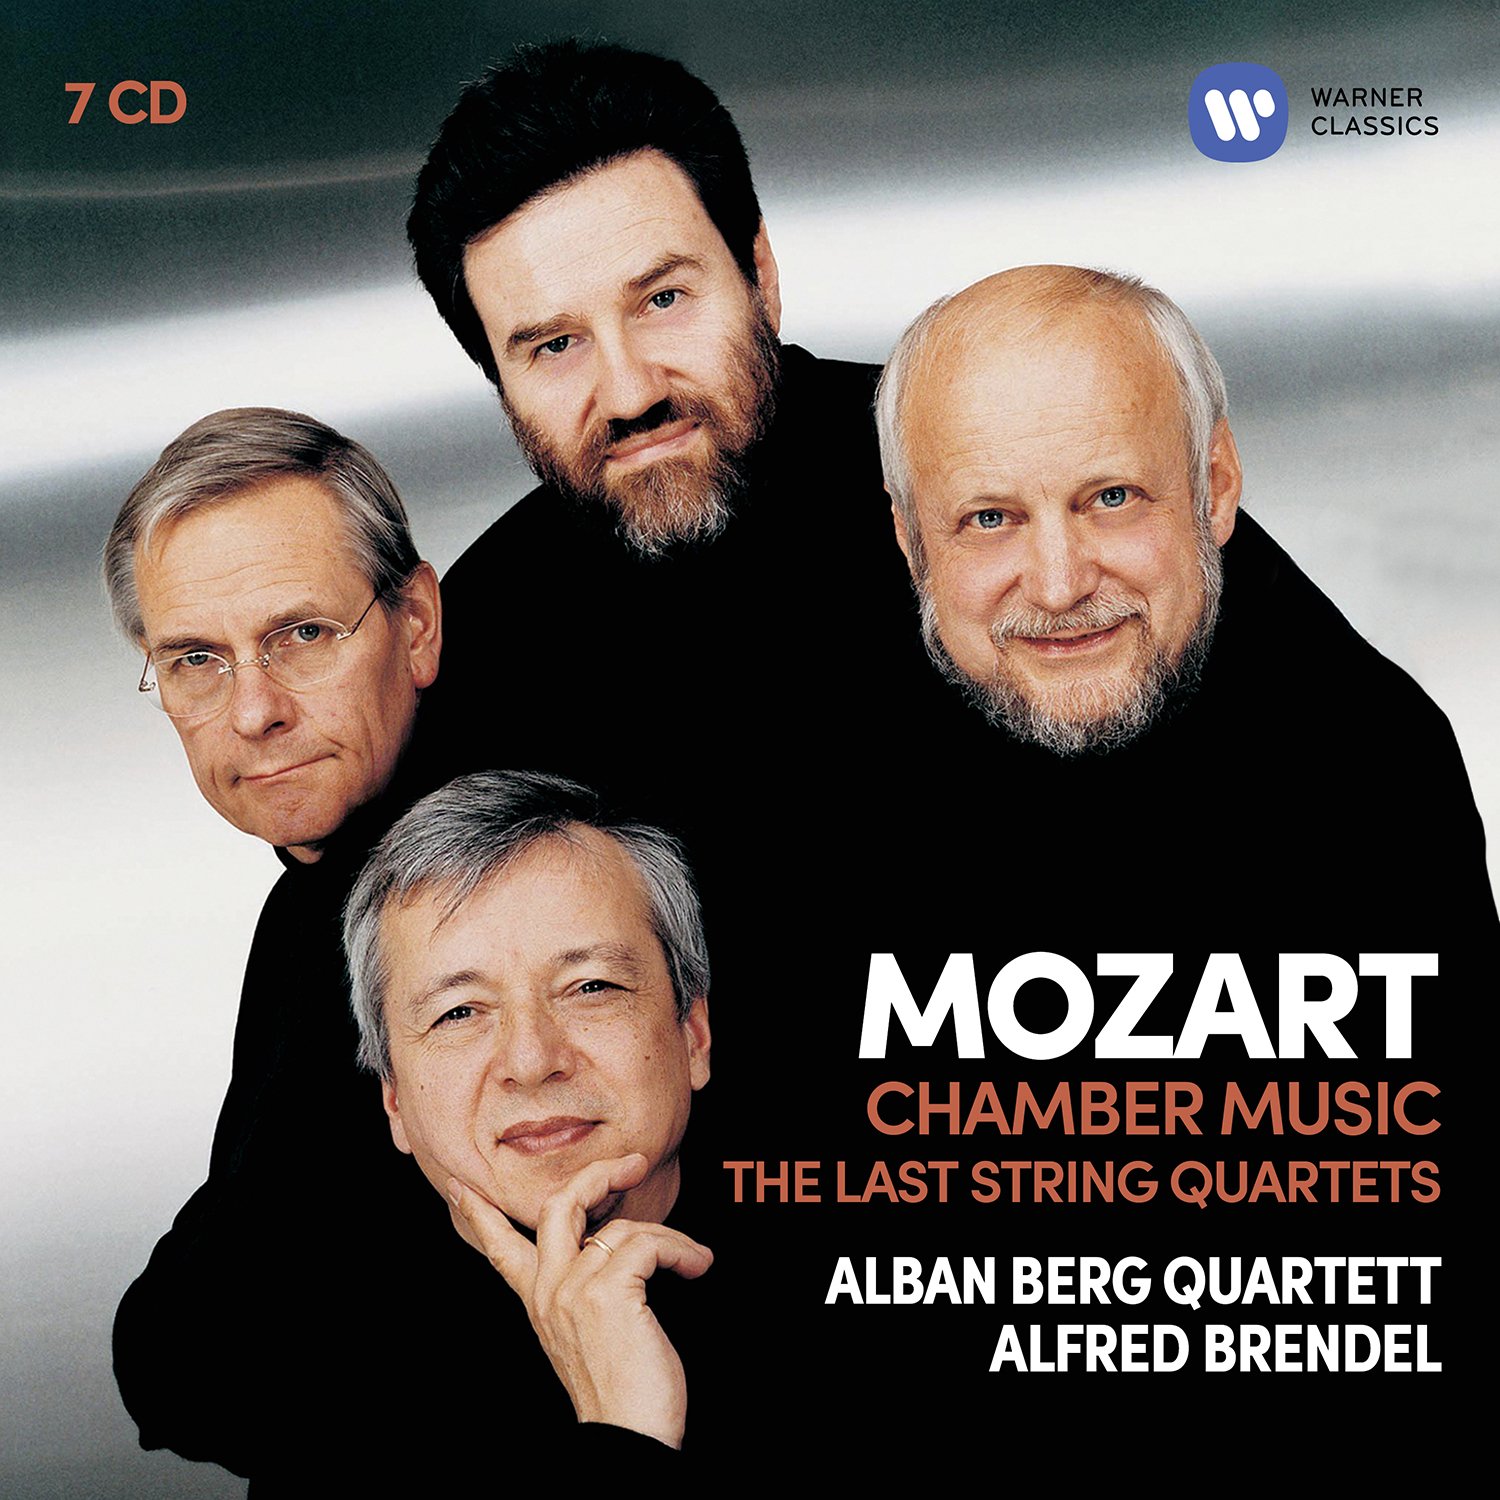 Alfred　Markus　Wolfgang　Quartets　Amadeus　Brendel,　Berg　Music　Chamber　Quartett,　Wolff　Mozart,　Last　String　The　Mozart:　Alban